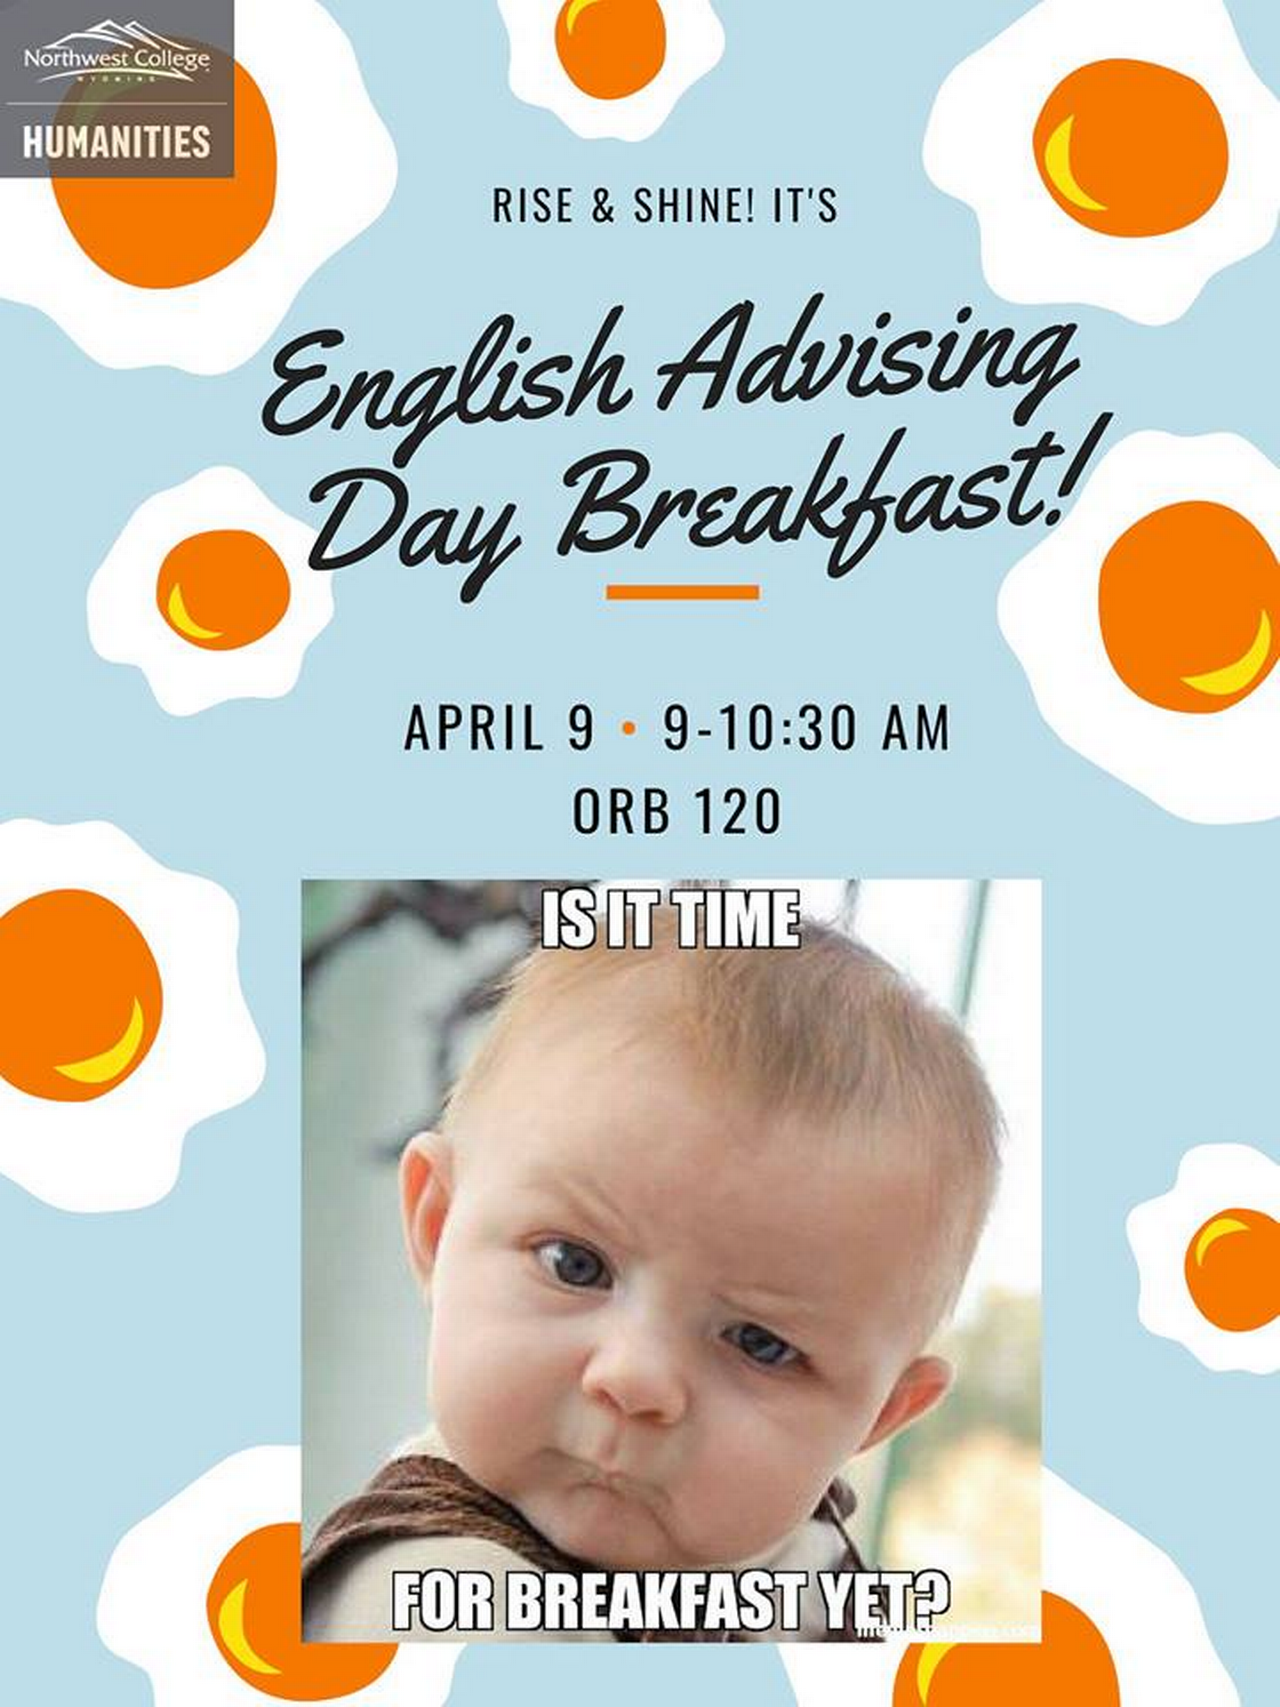 English Advising Day Breakfast image